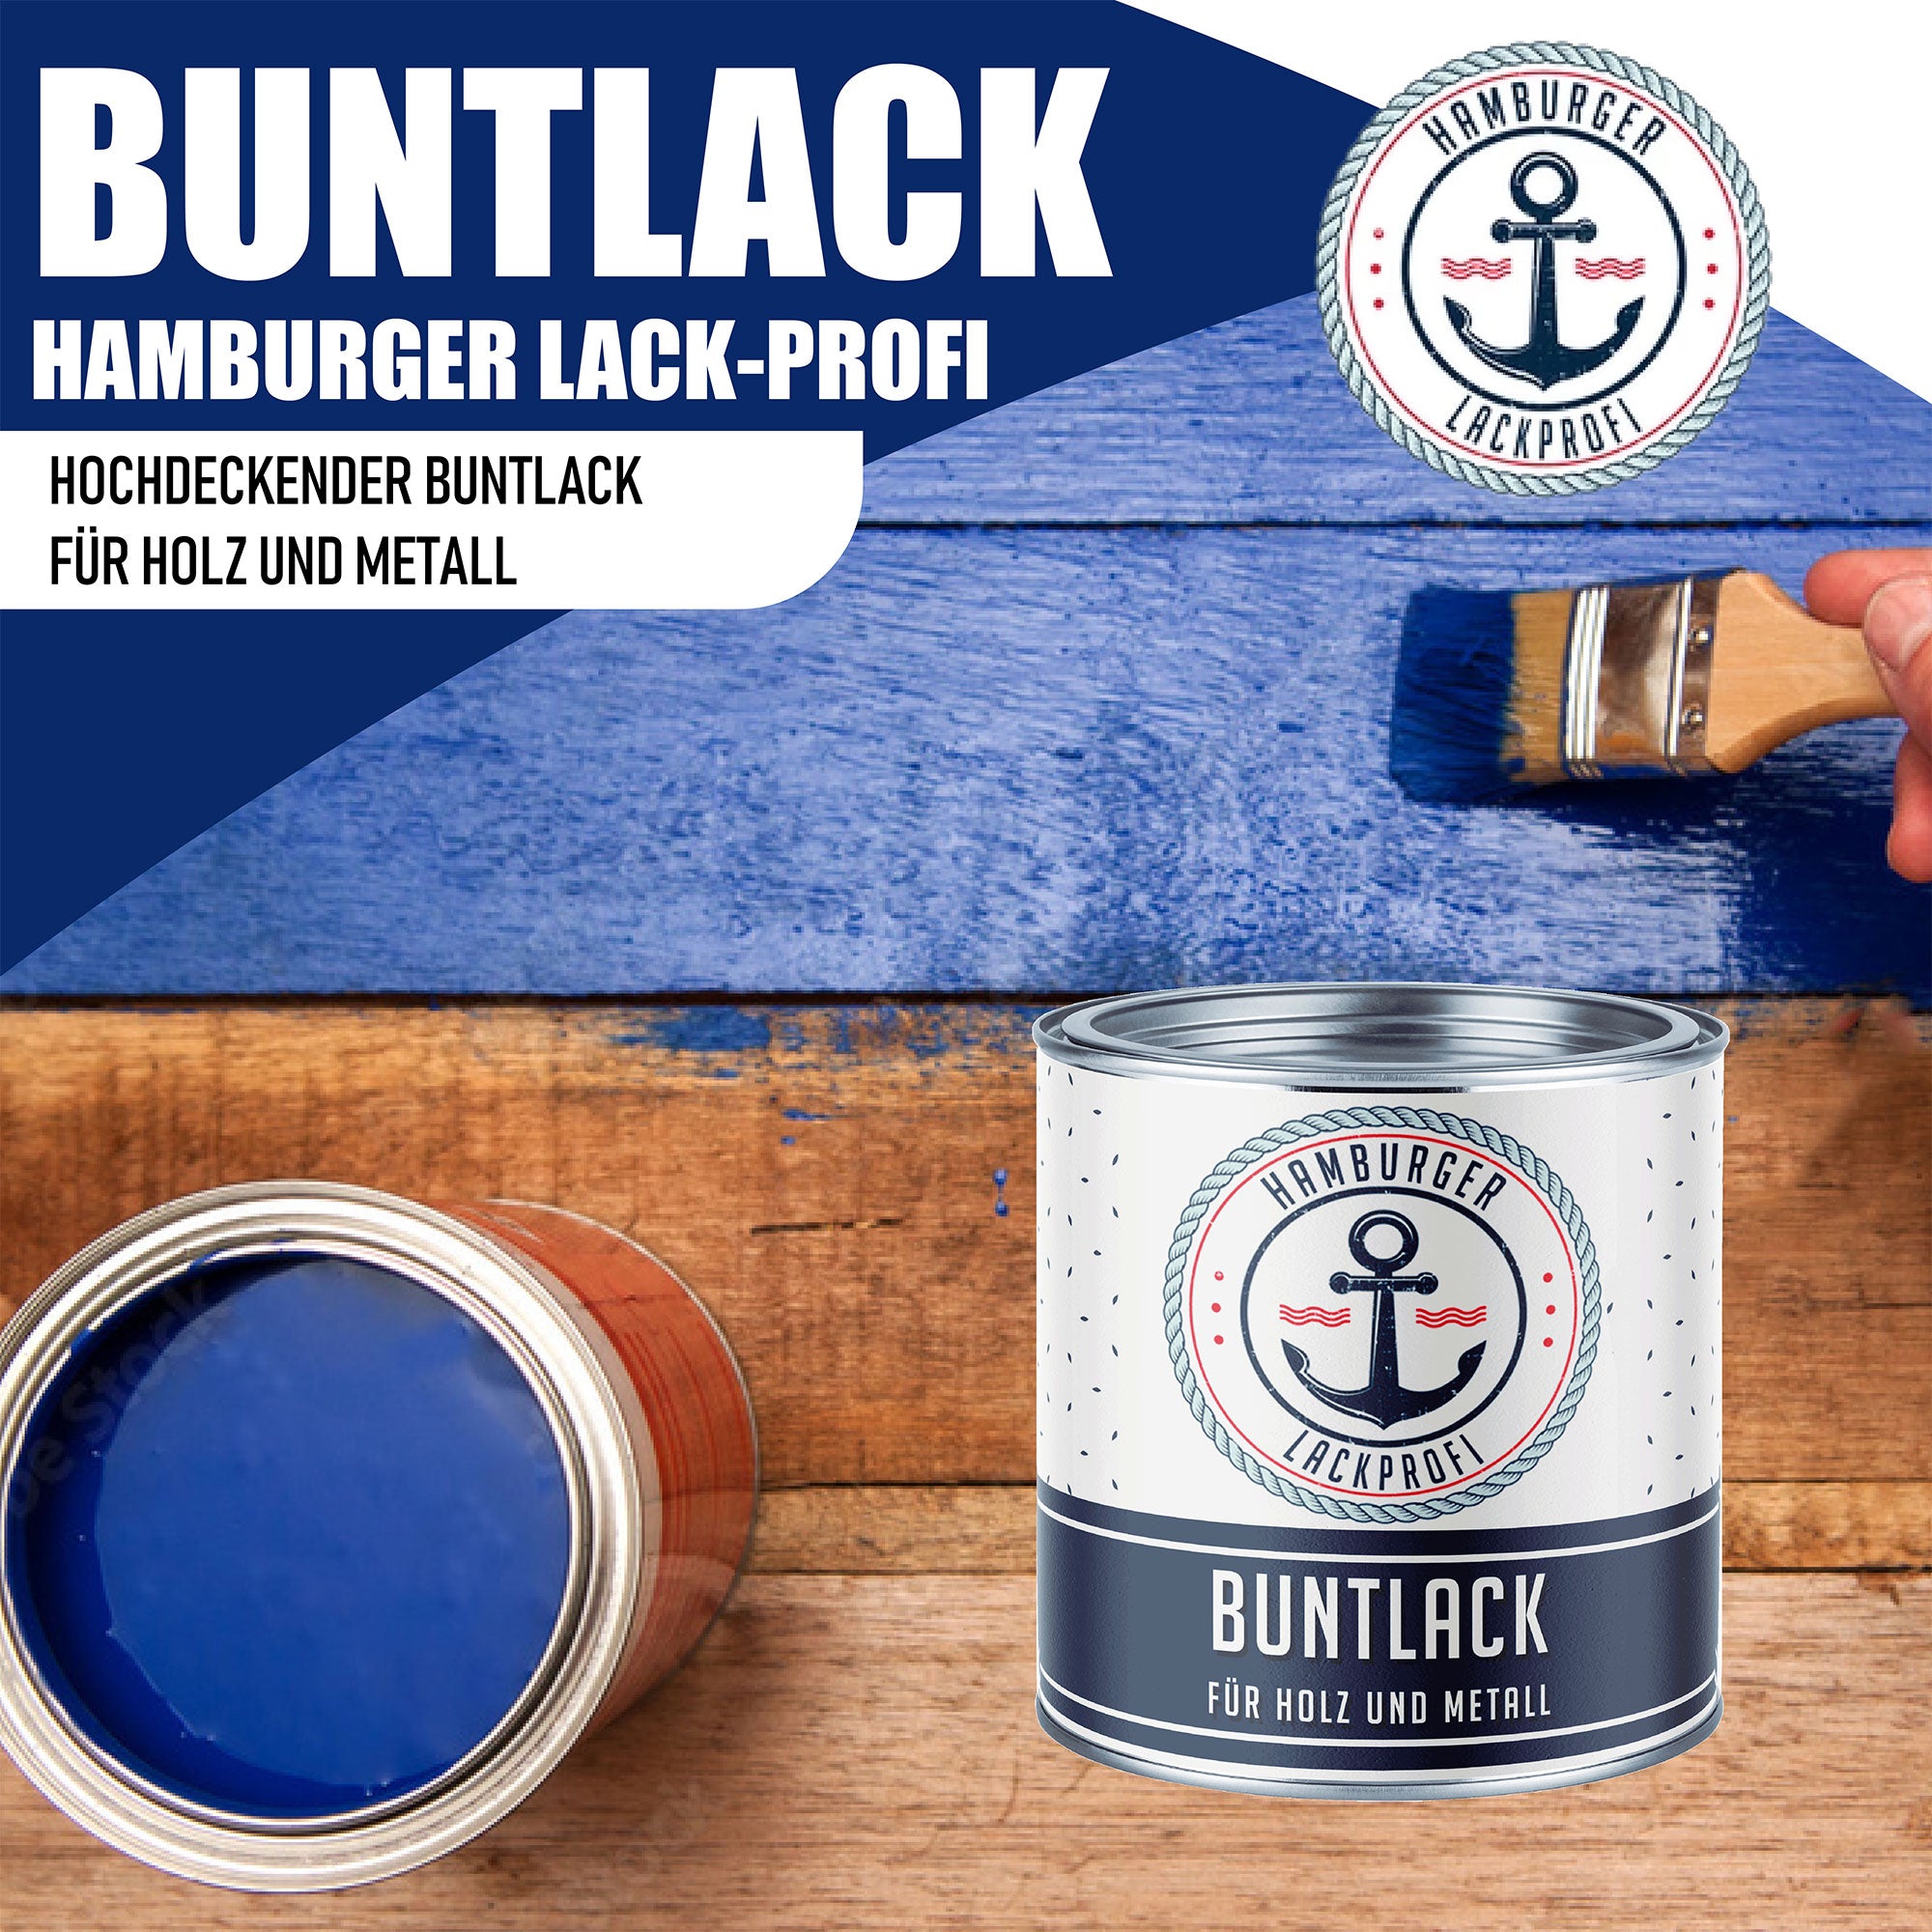 Hamburger Lack-Profi Buntlack Gelbgrün RAL 6018 - Robuster Kunstharzlack